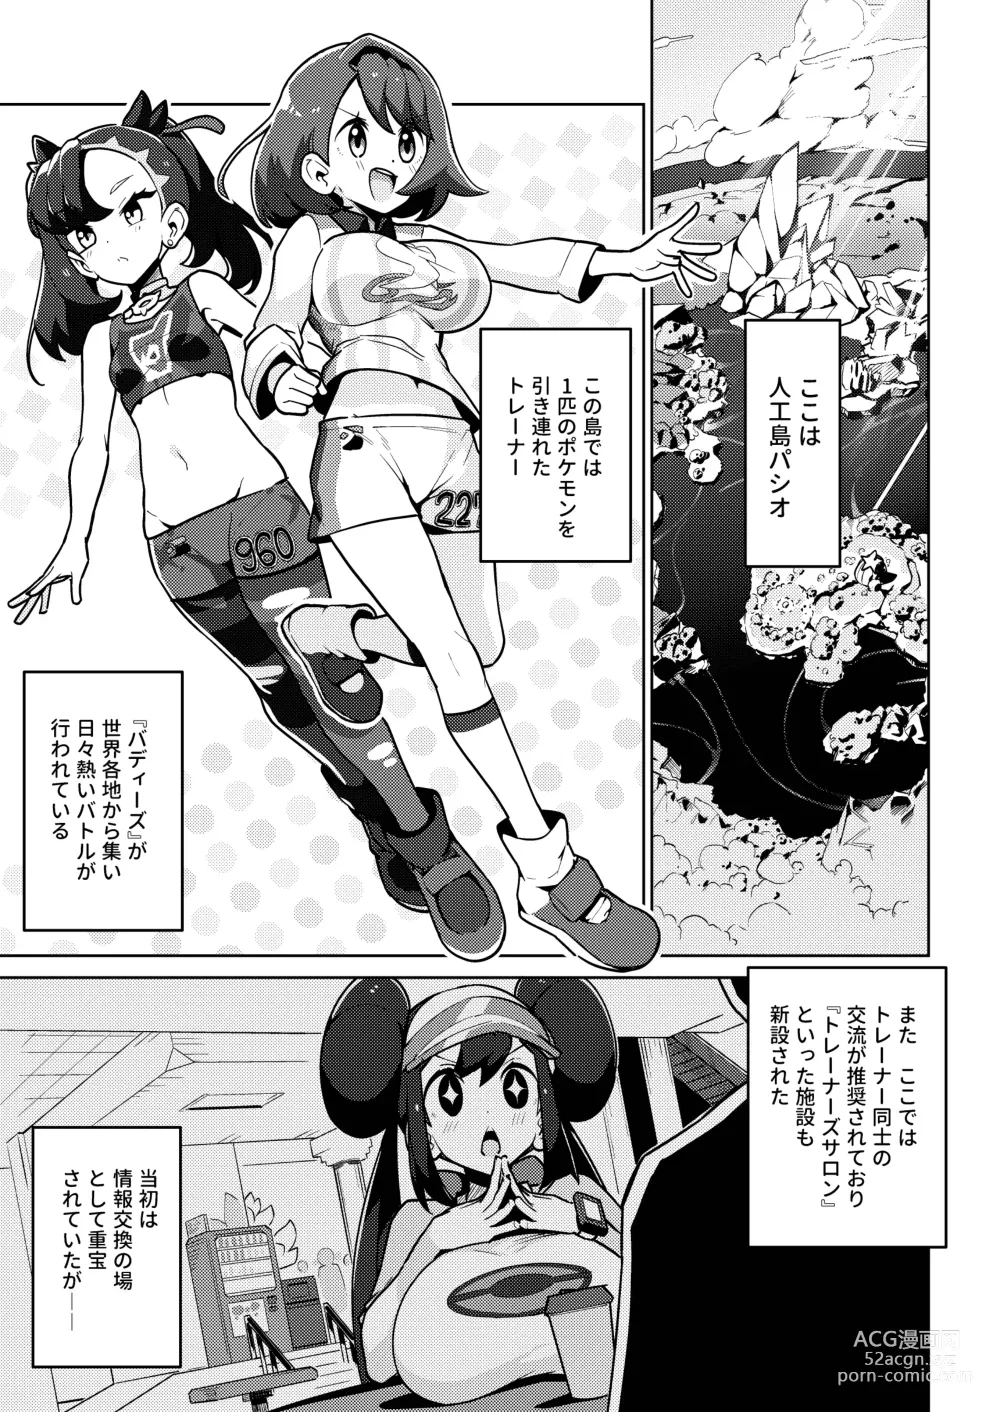 Page 3 of doujinshi POCKET BITCH 2